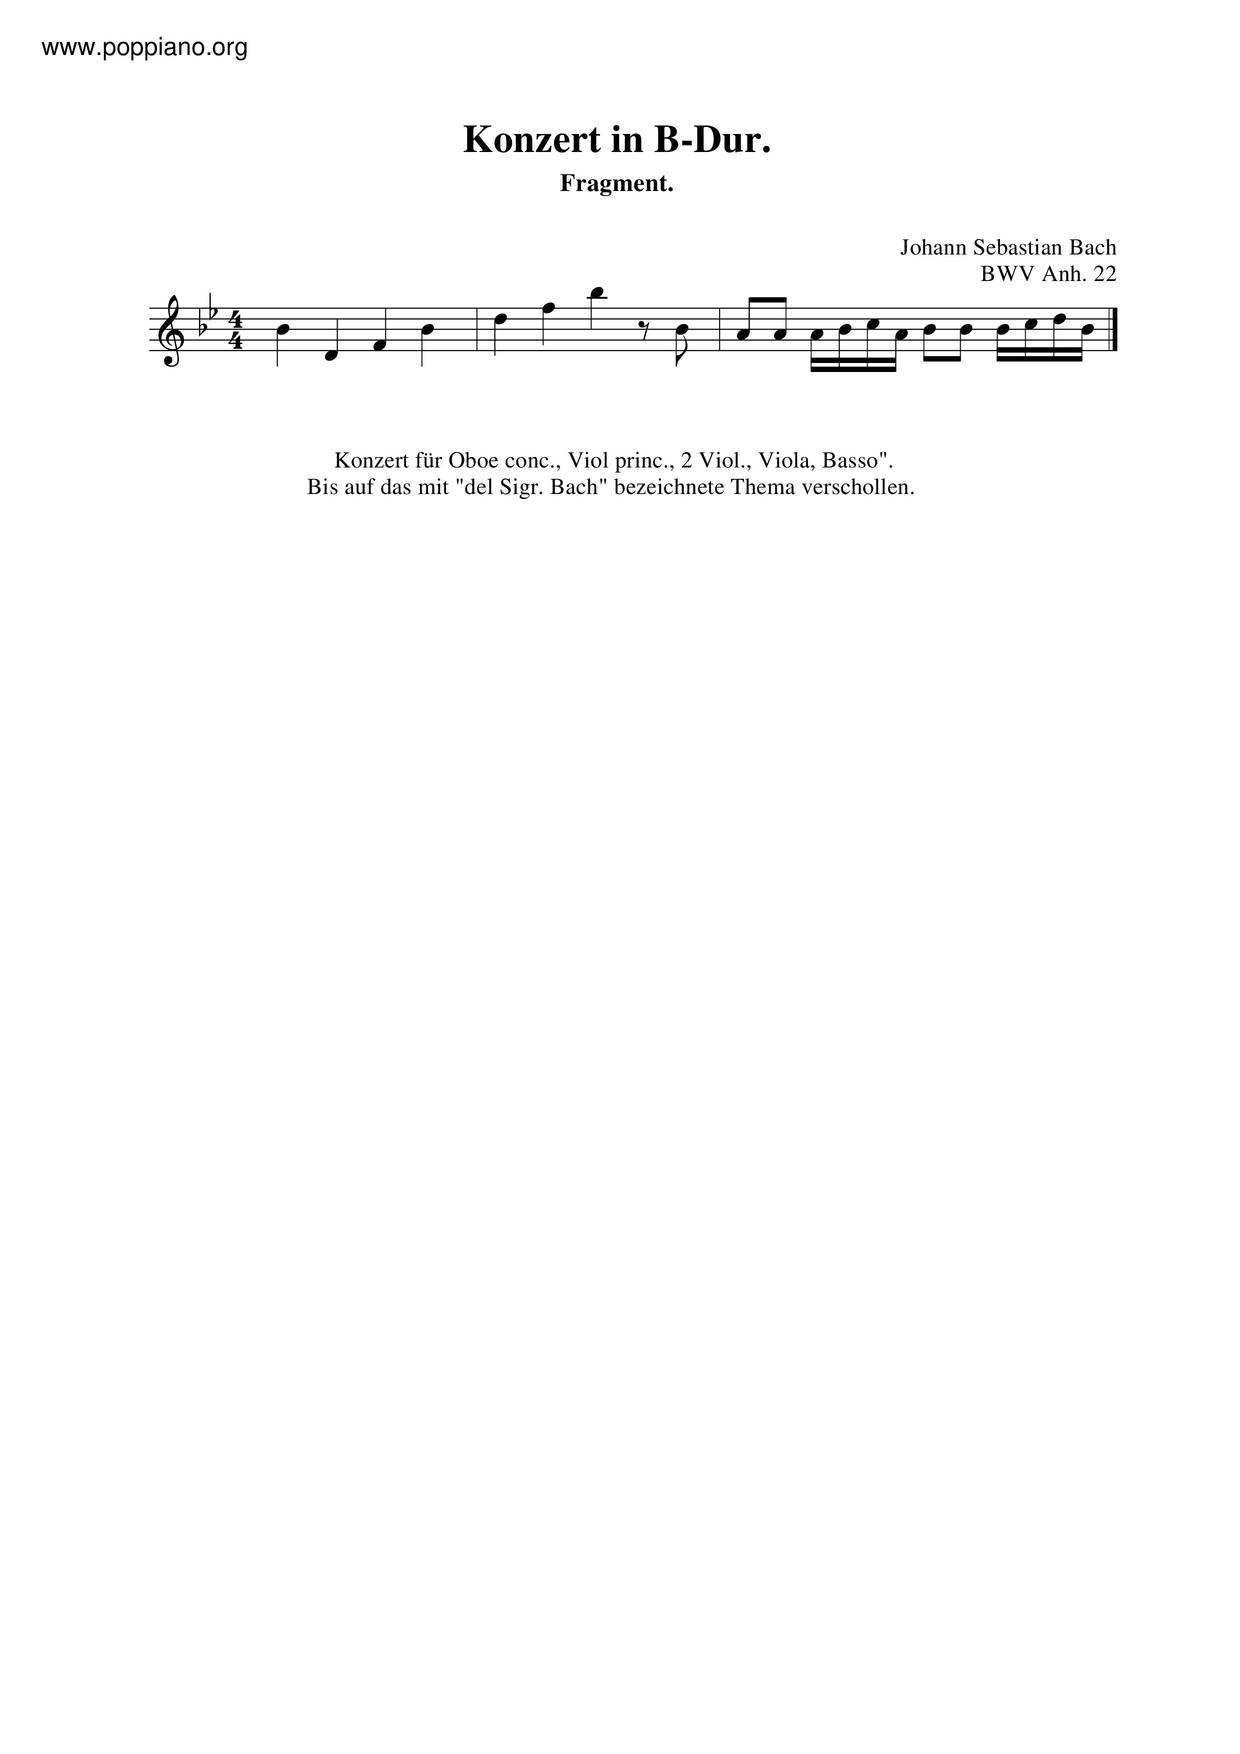 Concerto For Oboe And Violin In B-Flat Major, BWV Anh. 22琴谱